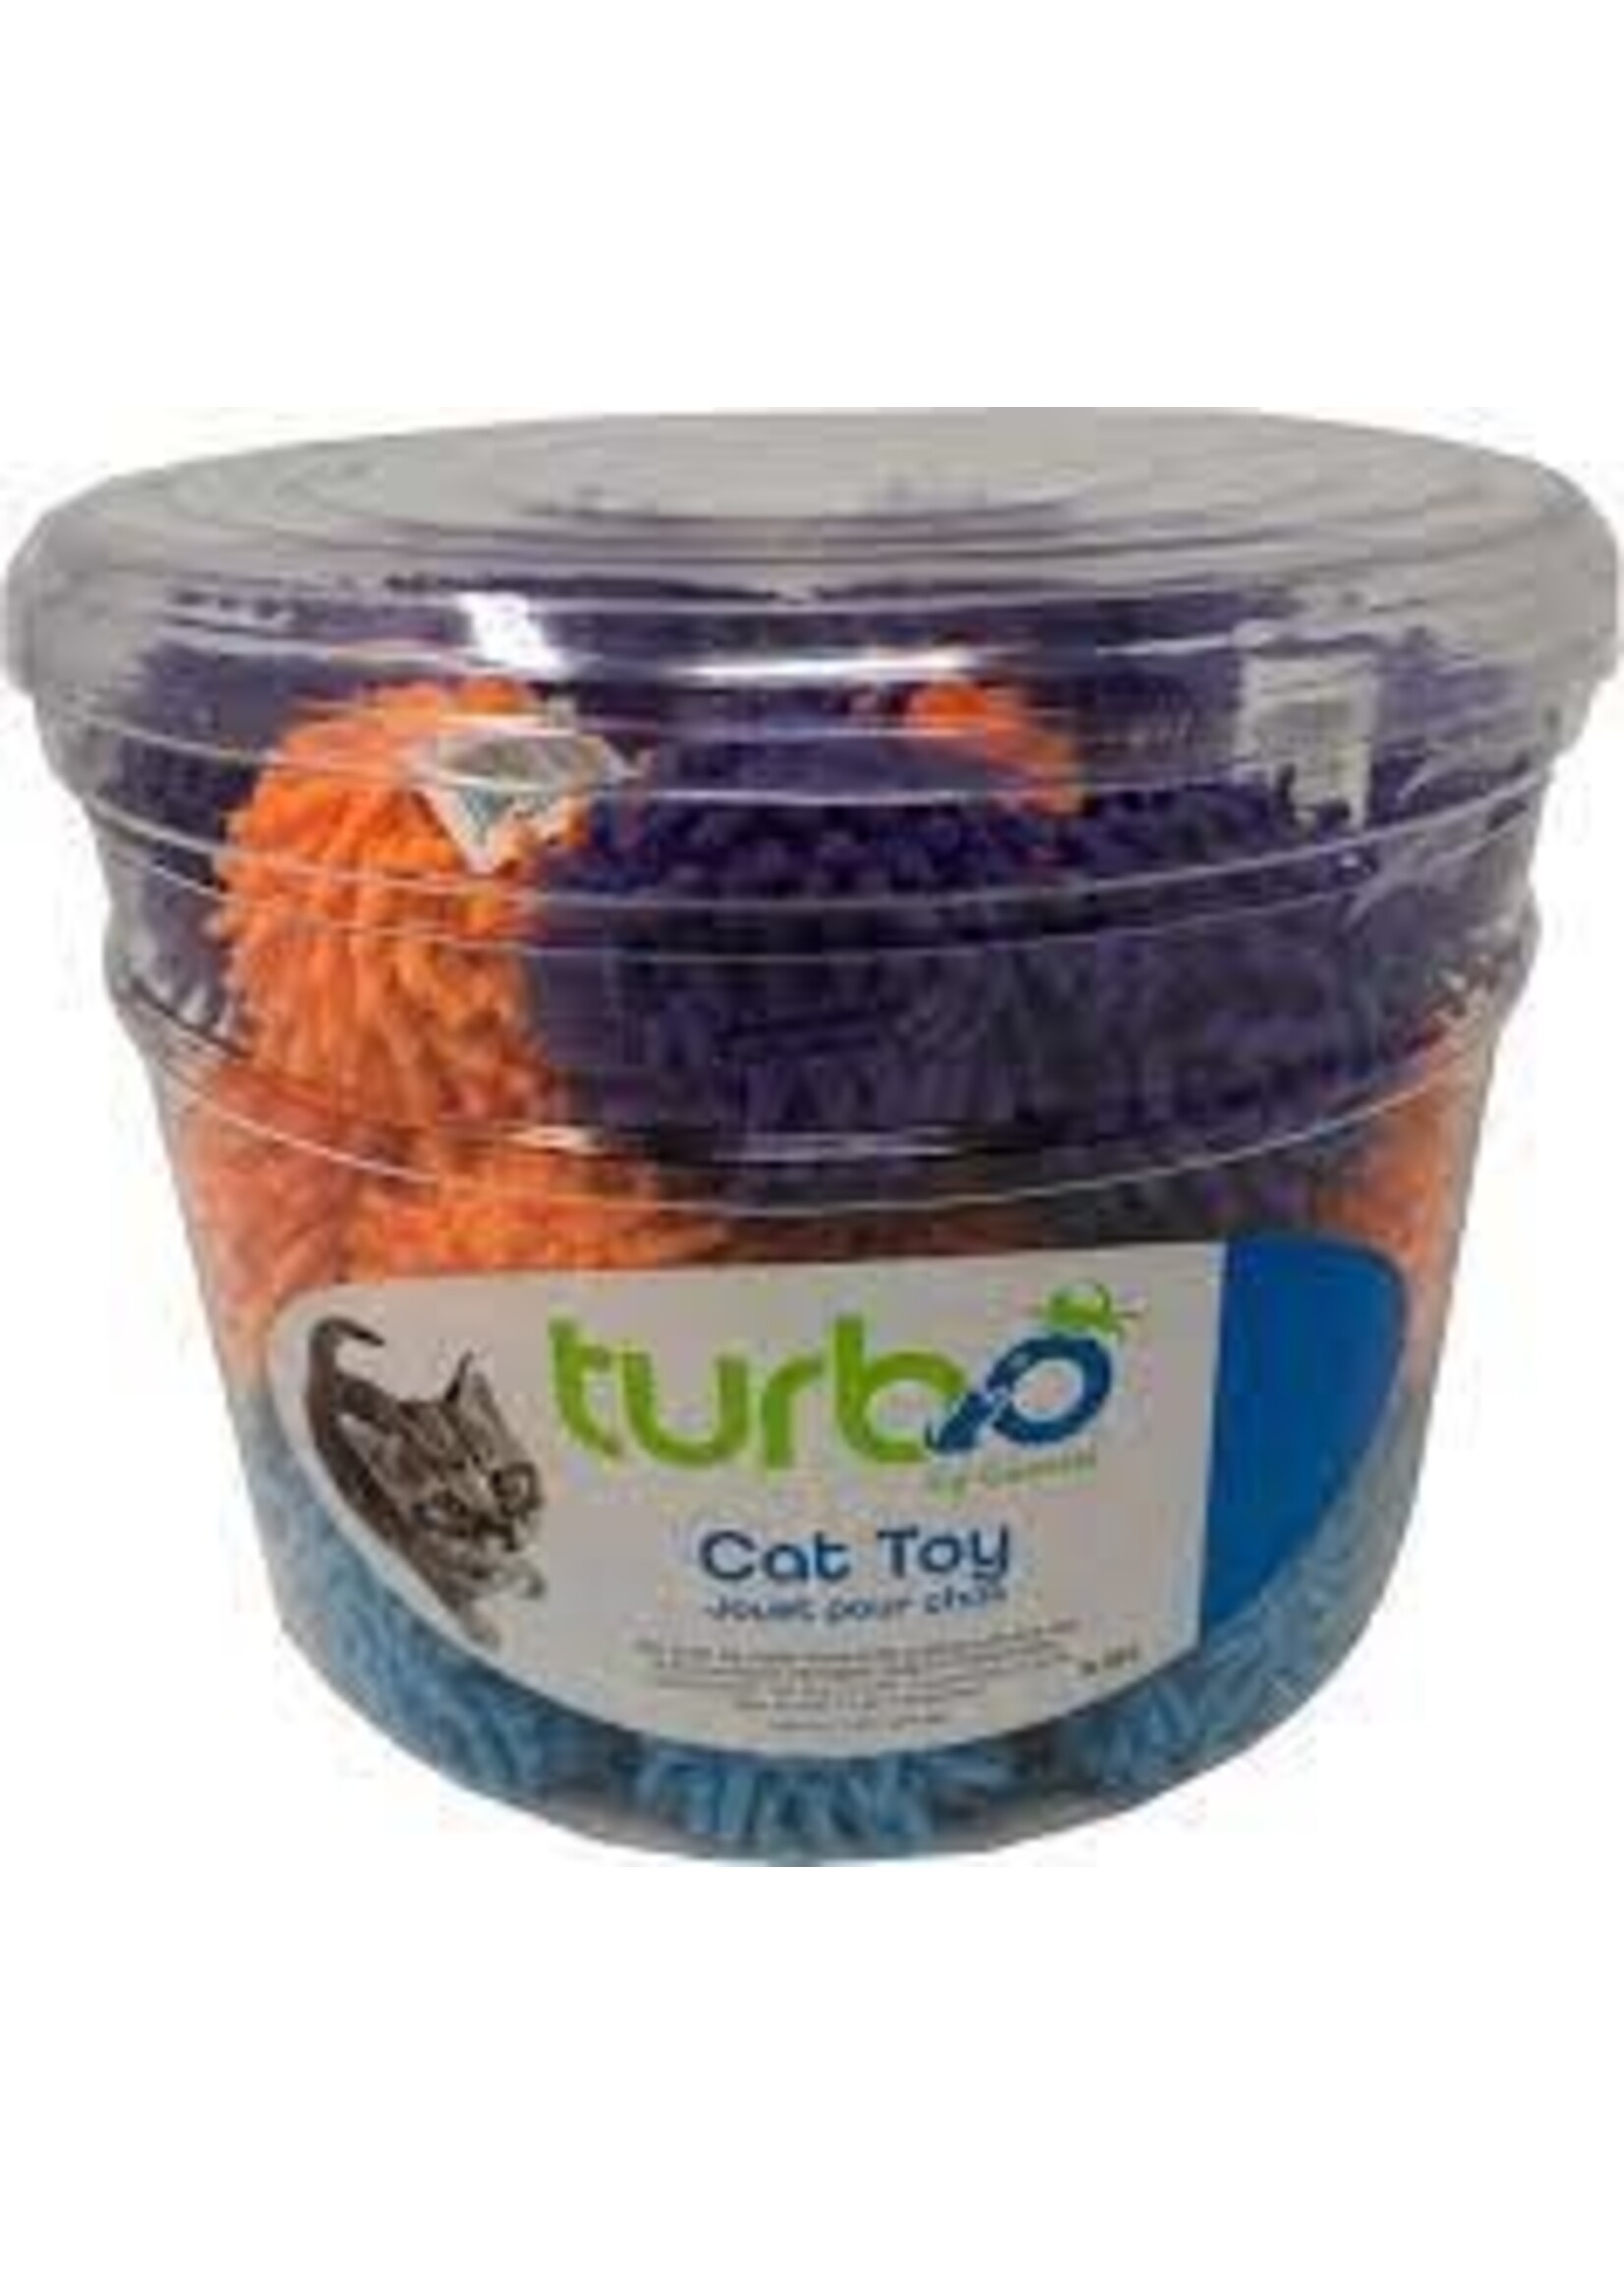 Coastal Pet Products Inc. Coastal Turbo Mop Ball